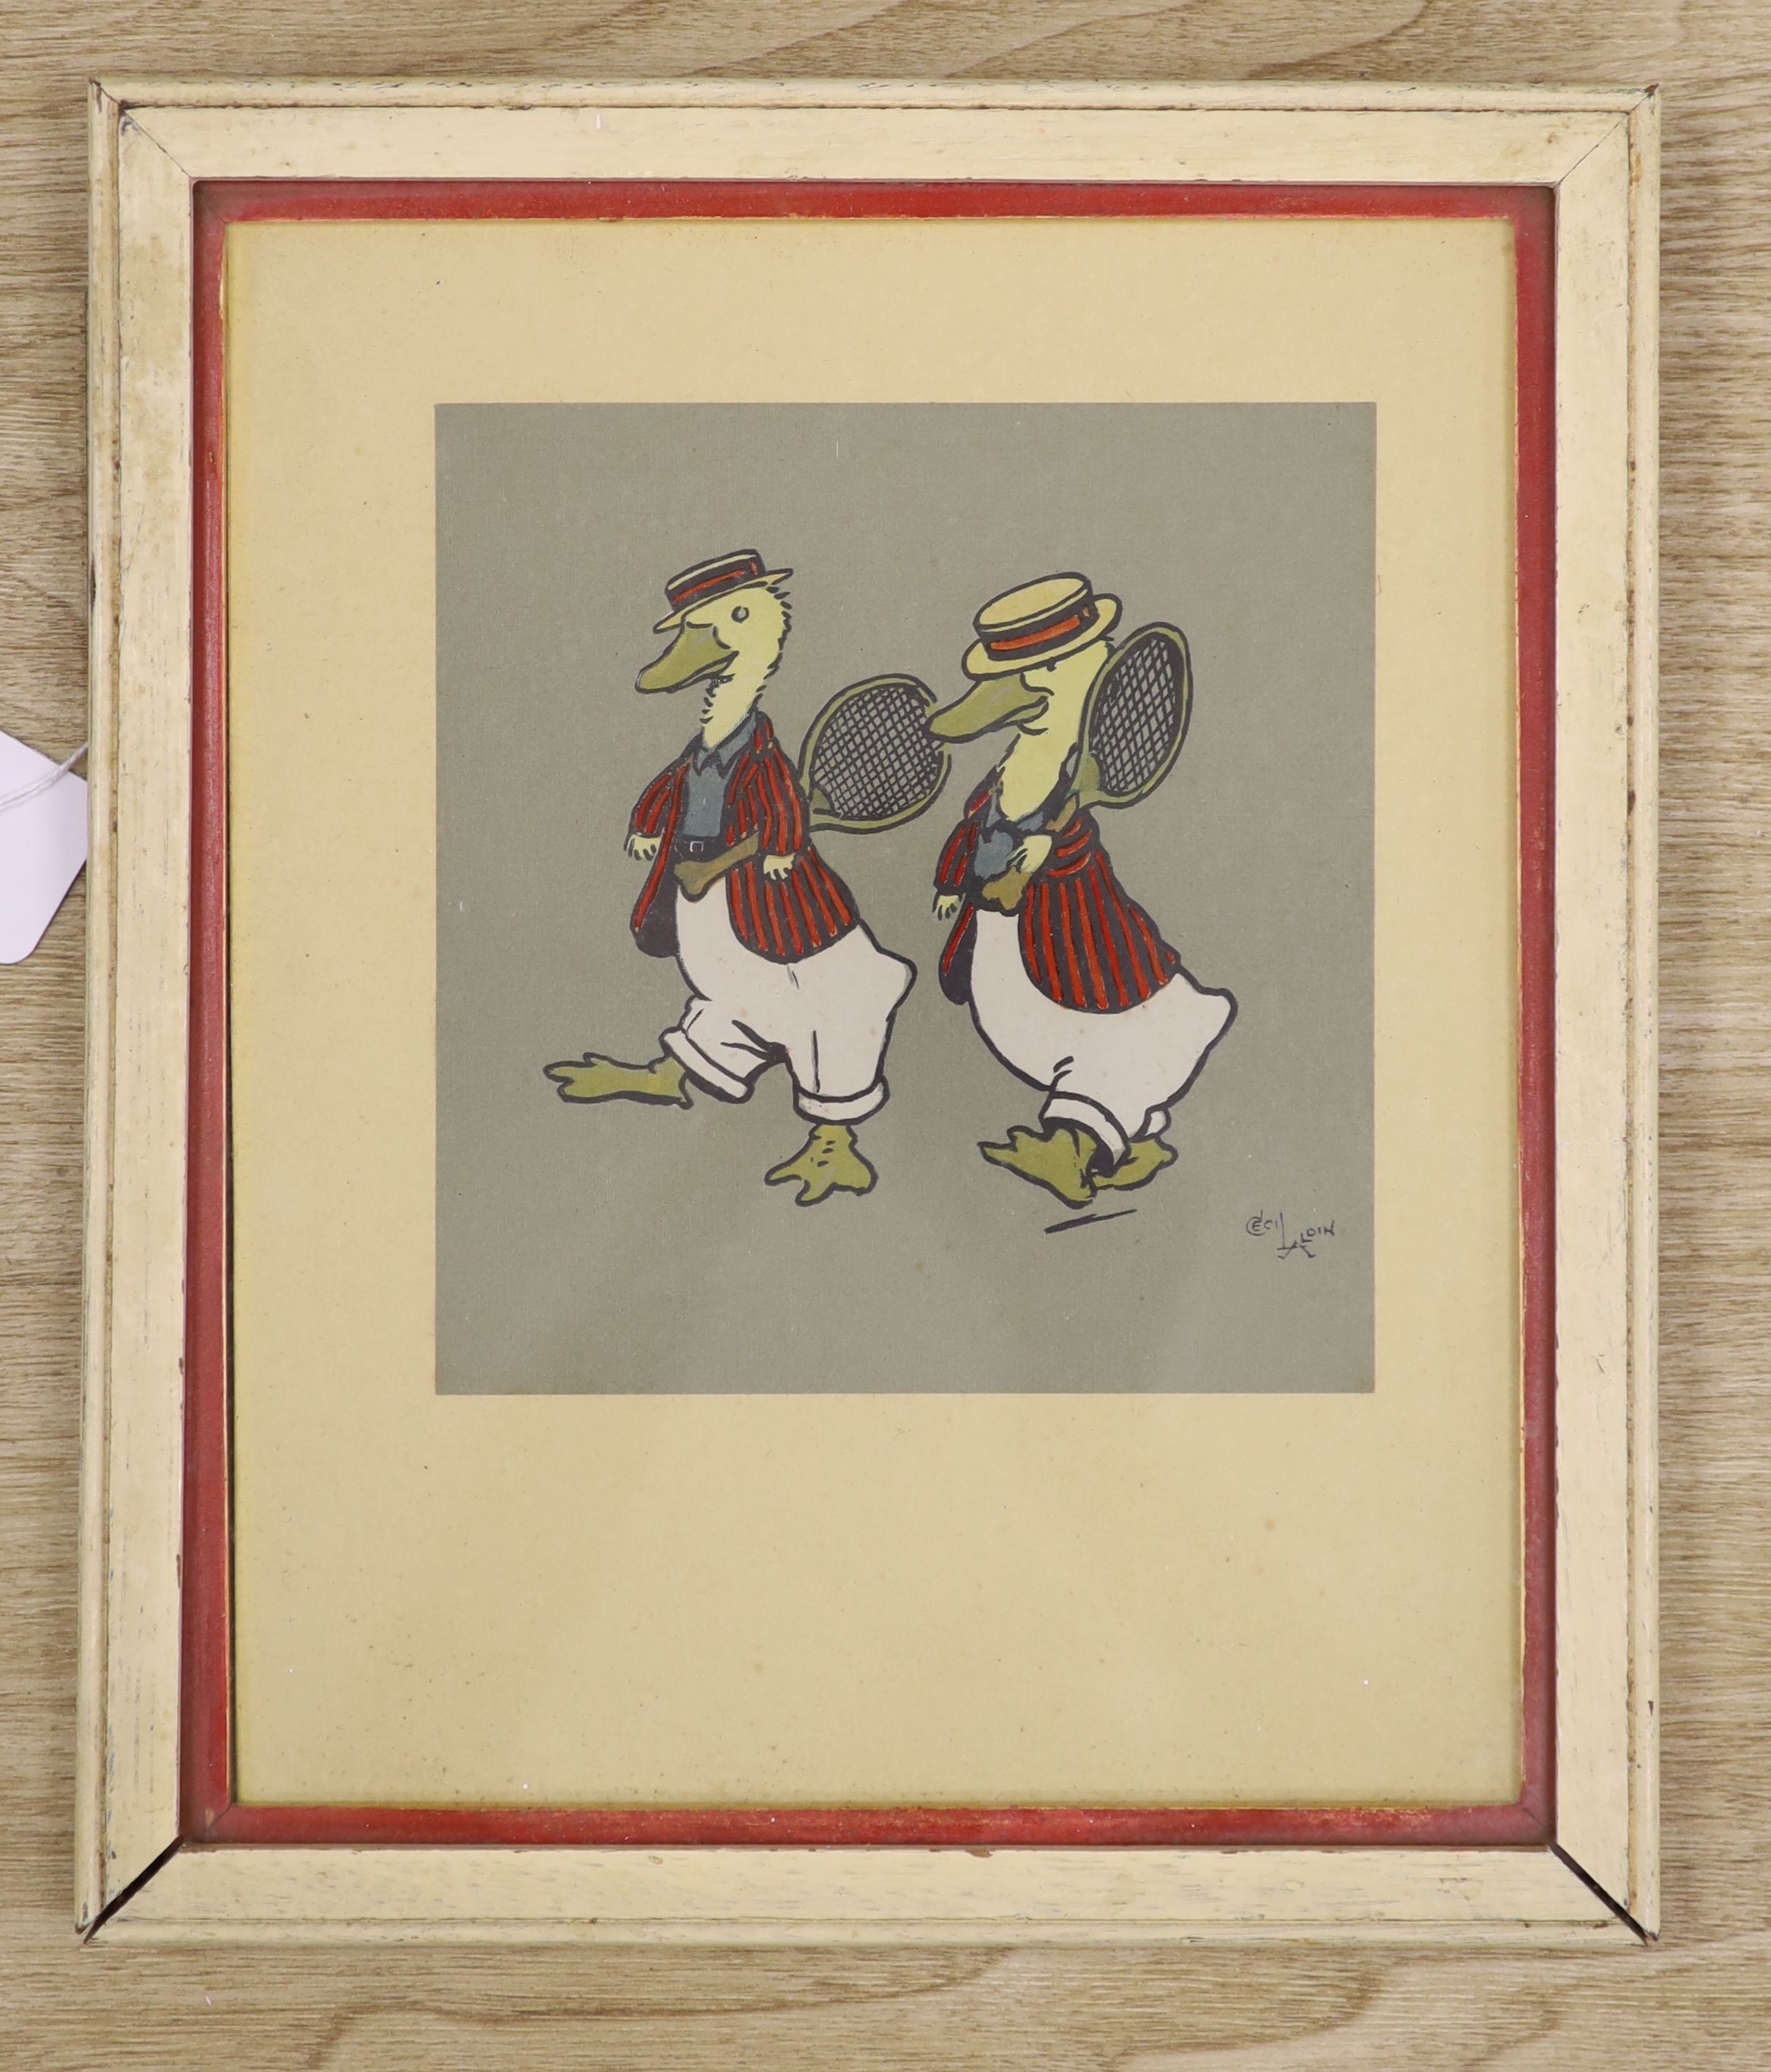 Cecil Aldin, chromolithograph, Ducks playing tennis, 17 x 16cm